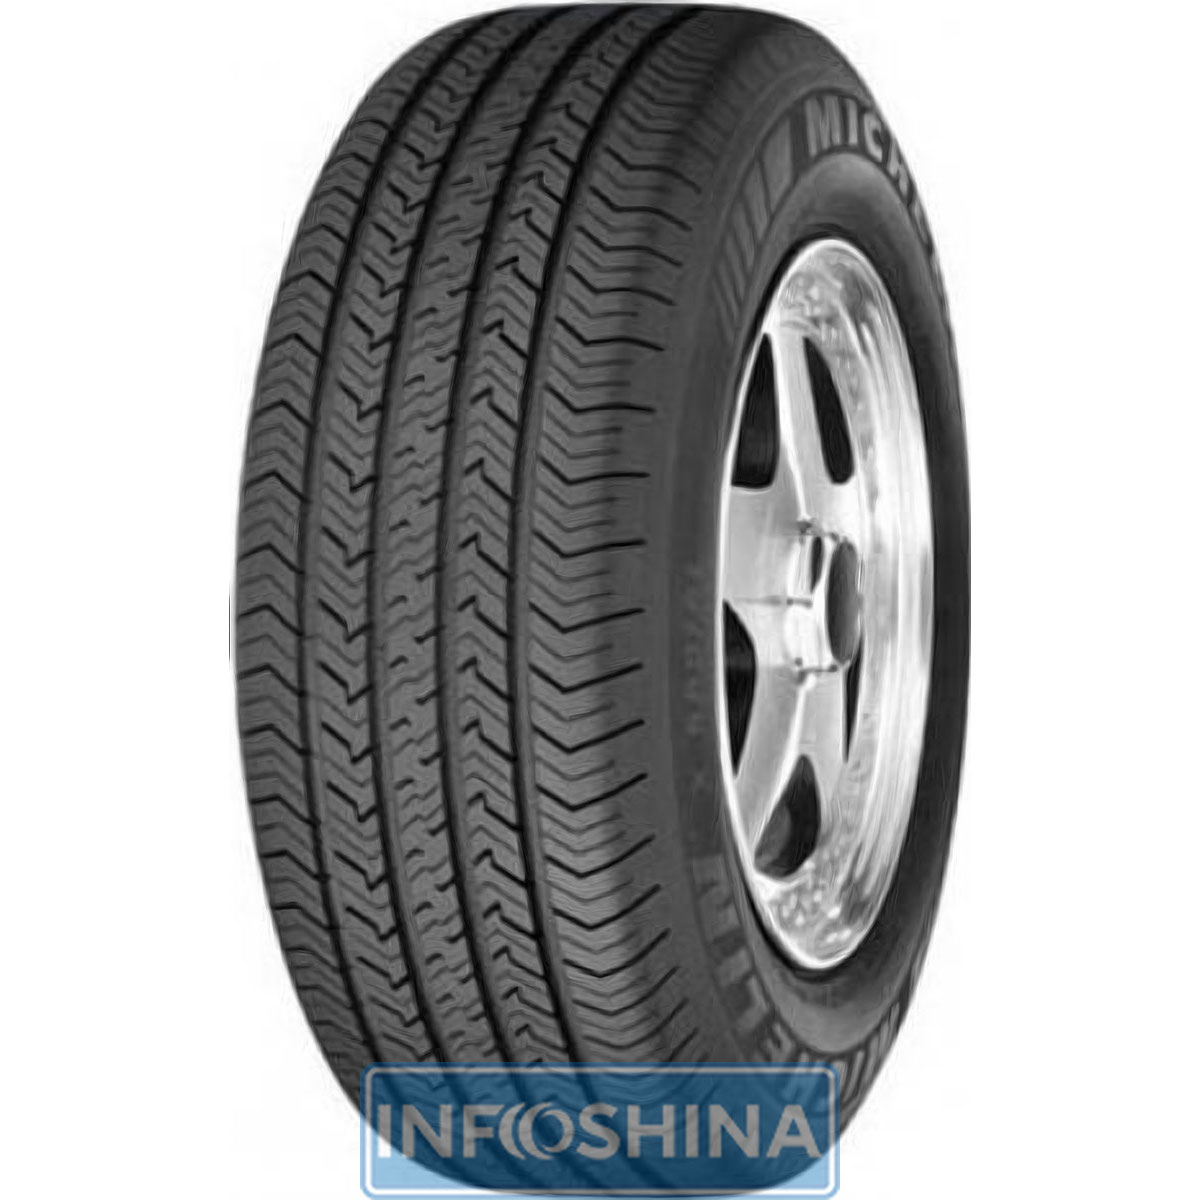 Купити шини Michelin X-Radial DT 185/65 R15 86T